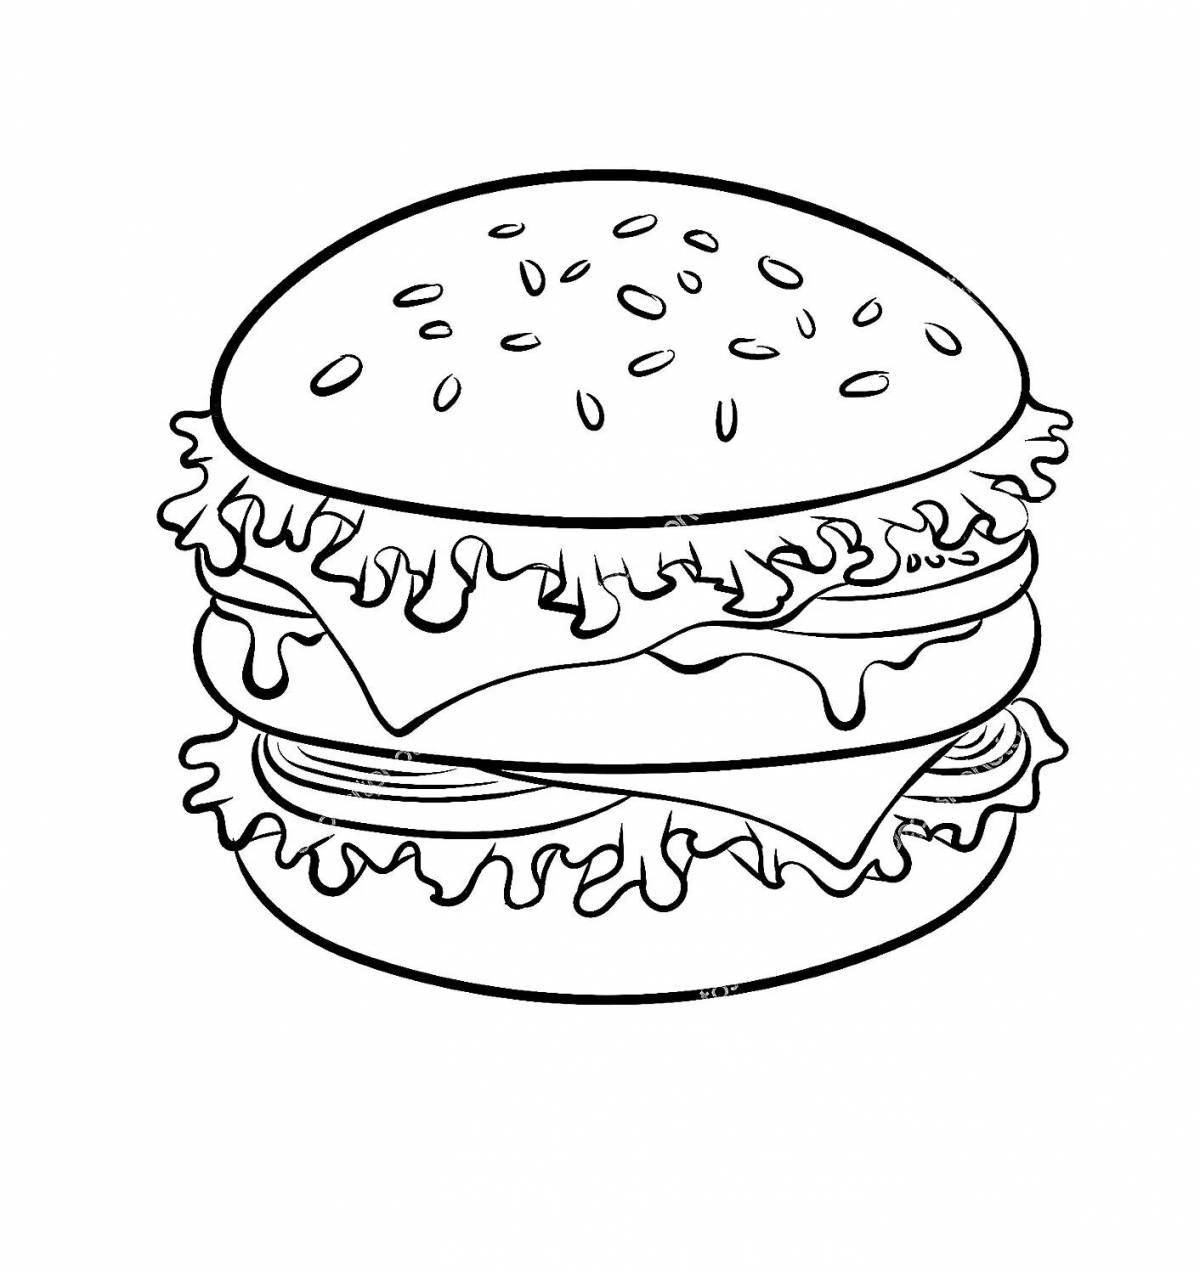 Coloring book teasing cheeseburger